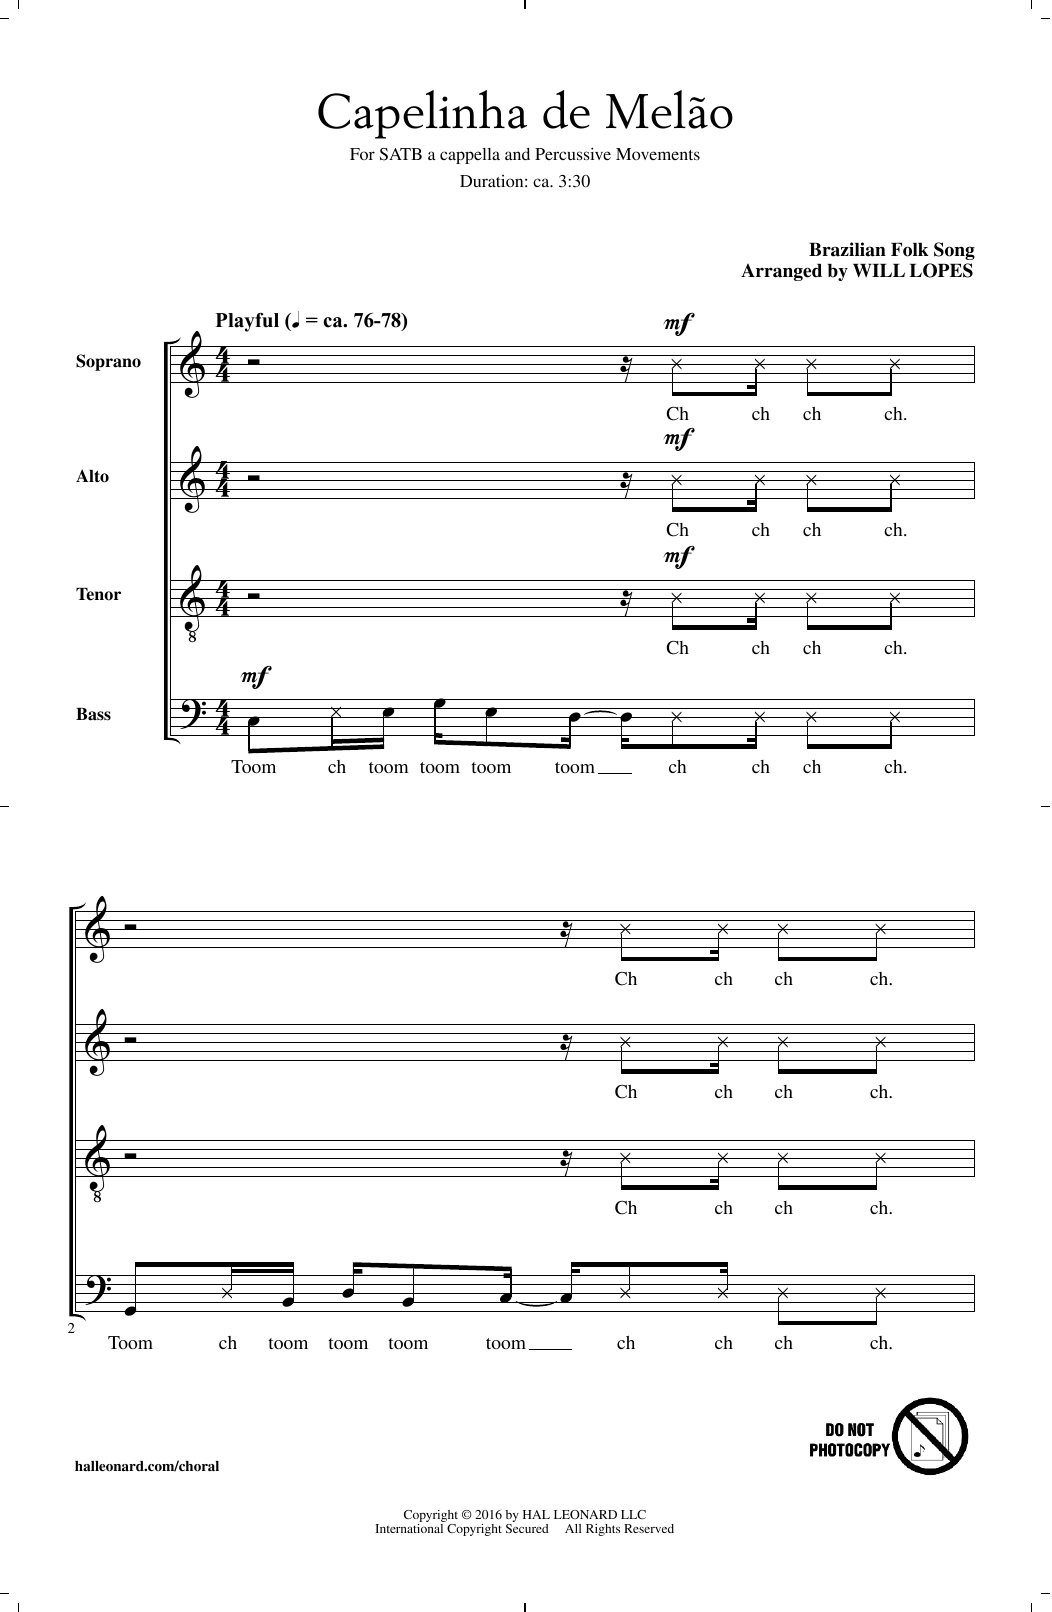 Will Lopes Capelinha De Melao sheet music notes and chords arranged for SATB Choir